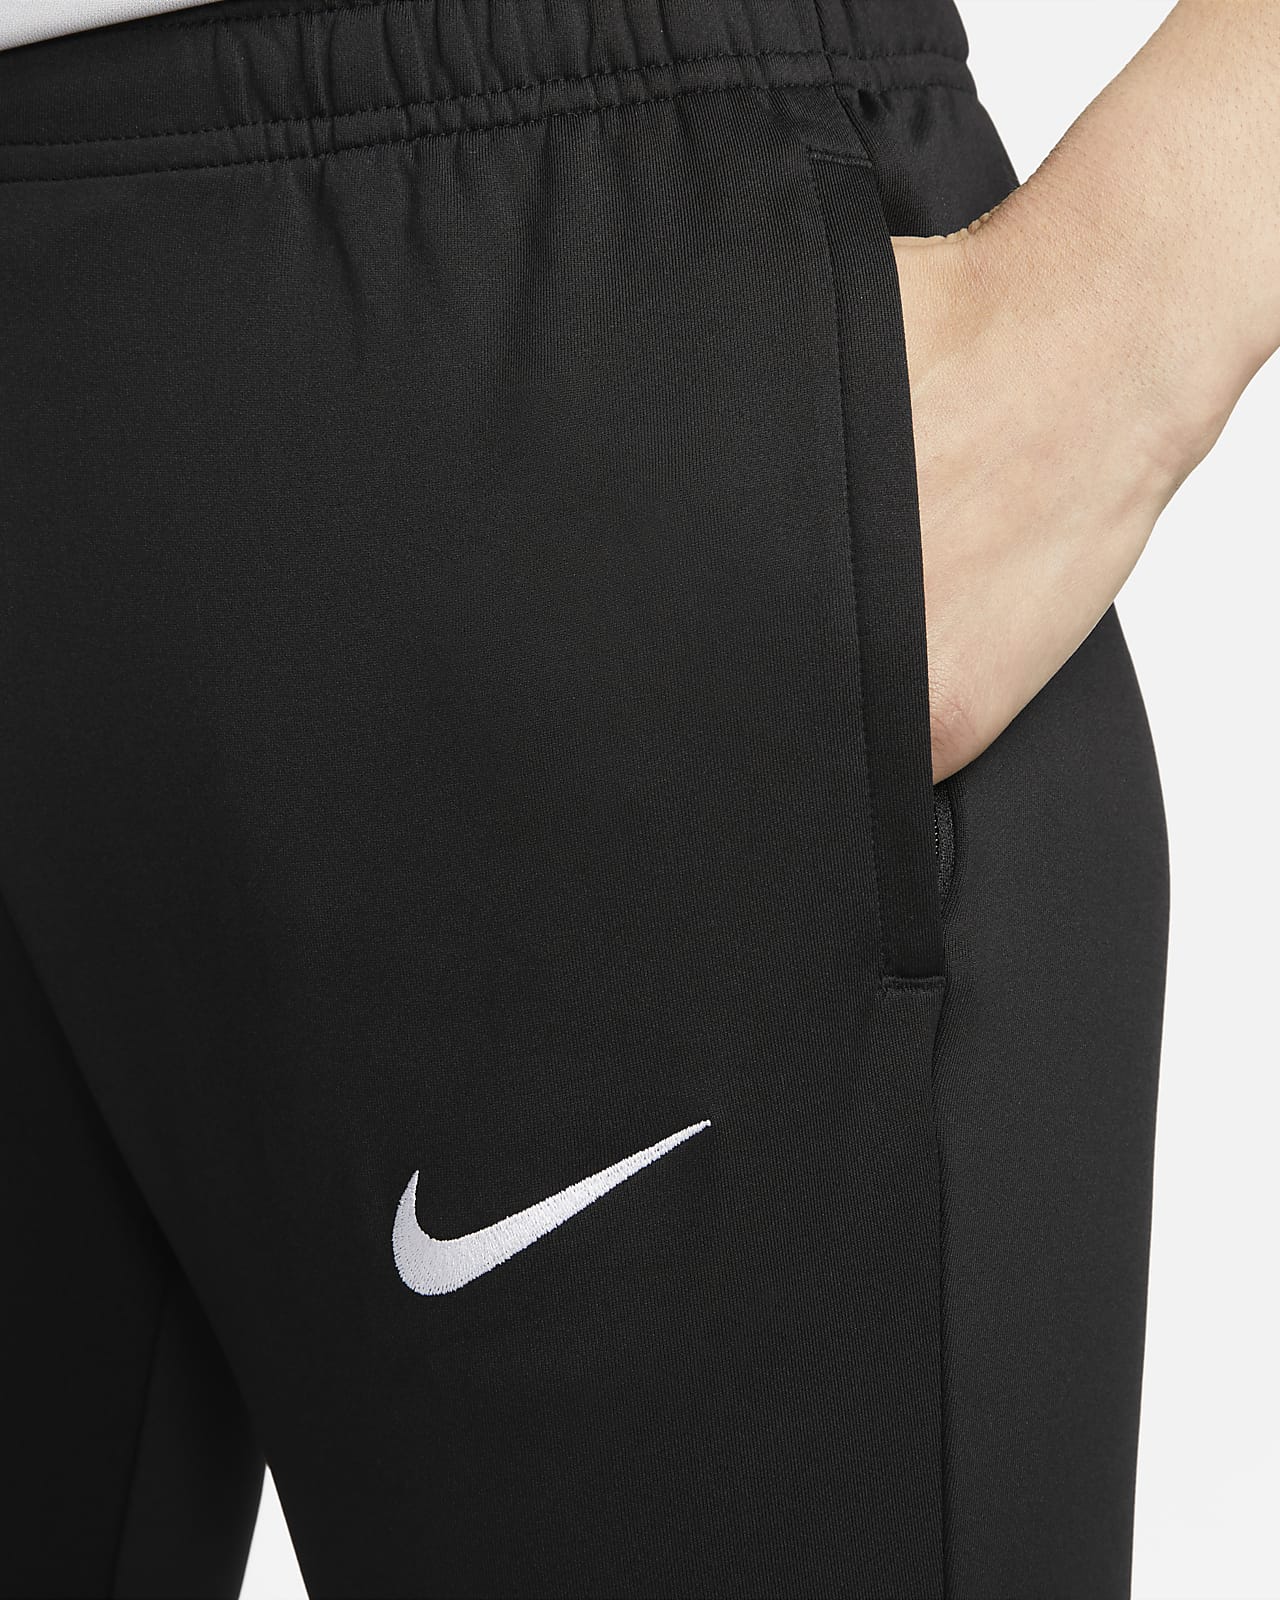 Nike, Dri-FIT Strike Track Pants Womens, Performance Tracksuit Bottoms